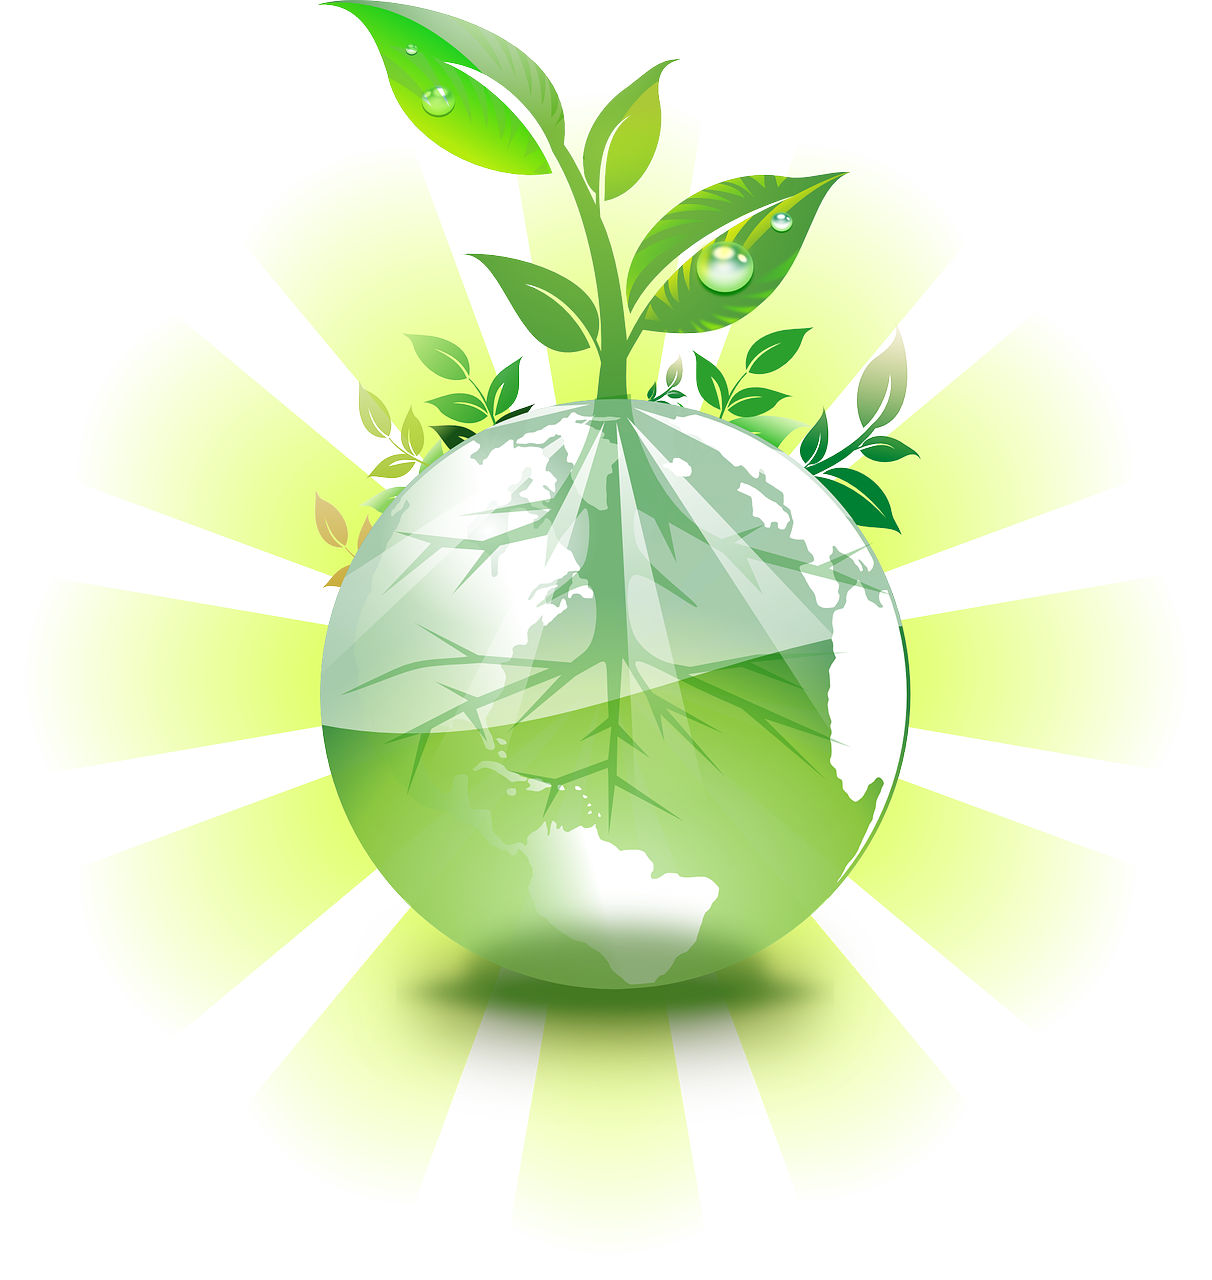 earth-158806_1280_OpenClipart-Vectors_Pixabay